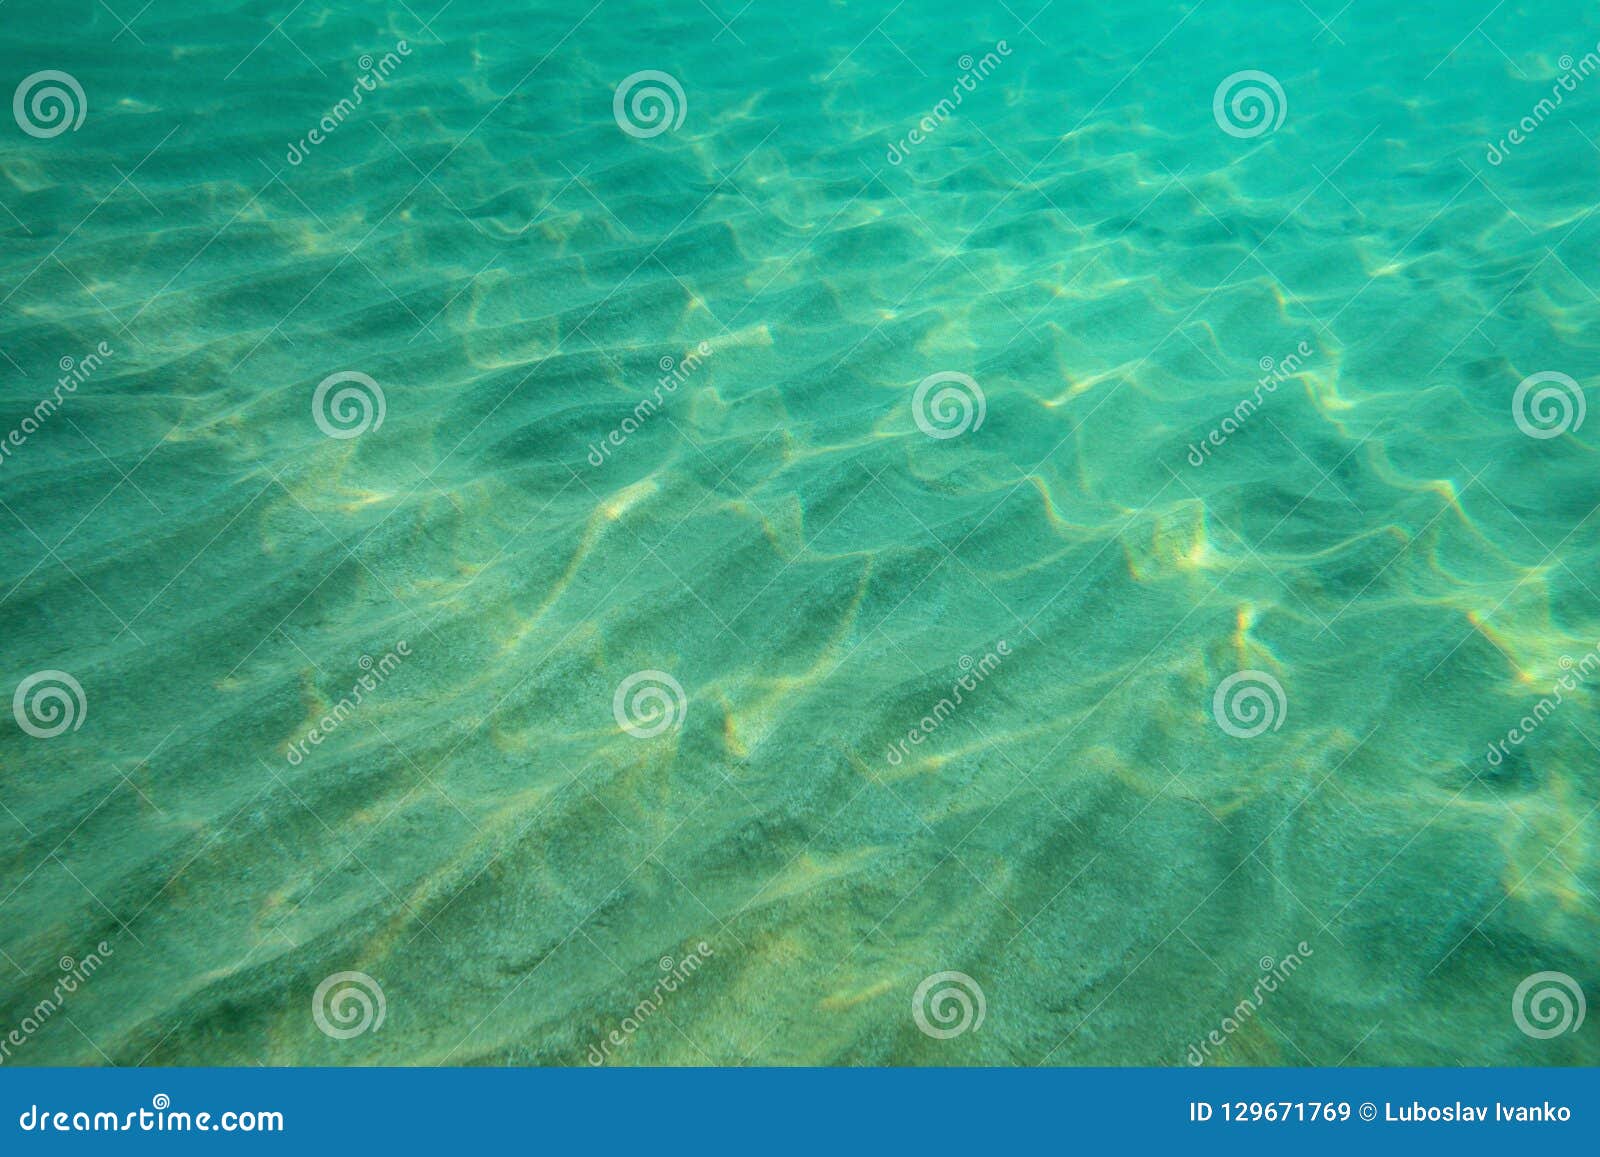 Ocean Floor Underwater Photo Sand Stock Image Image Of Seascape